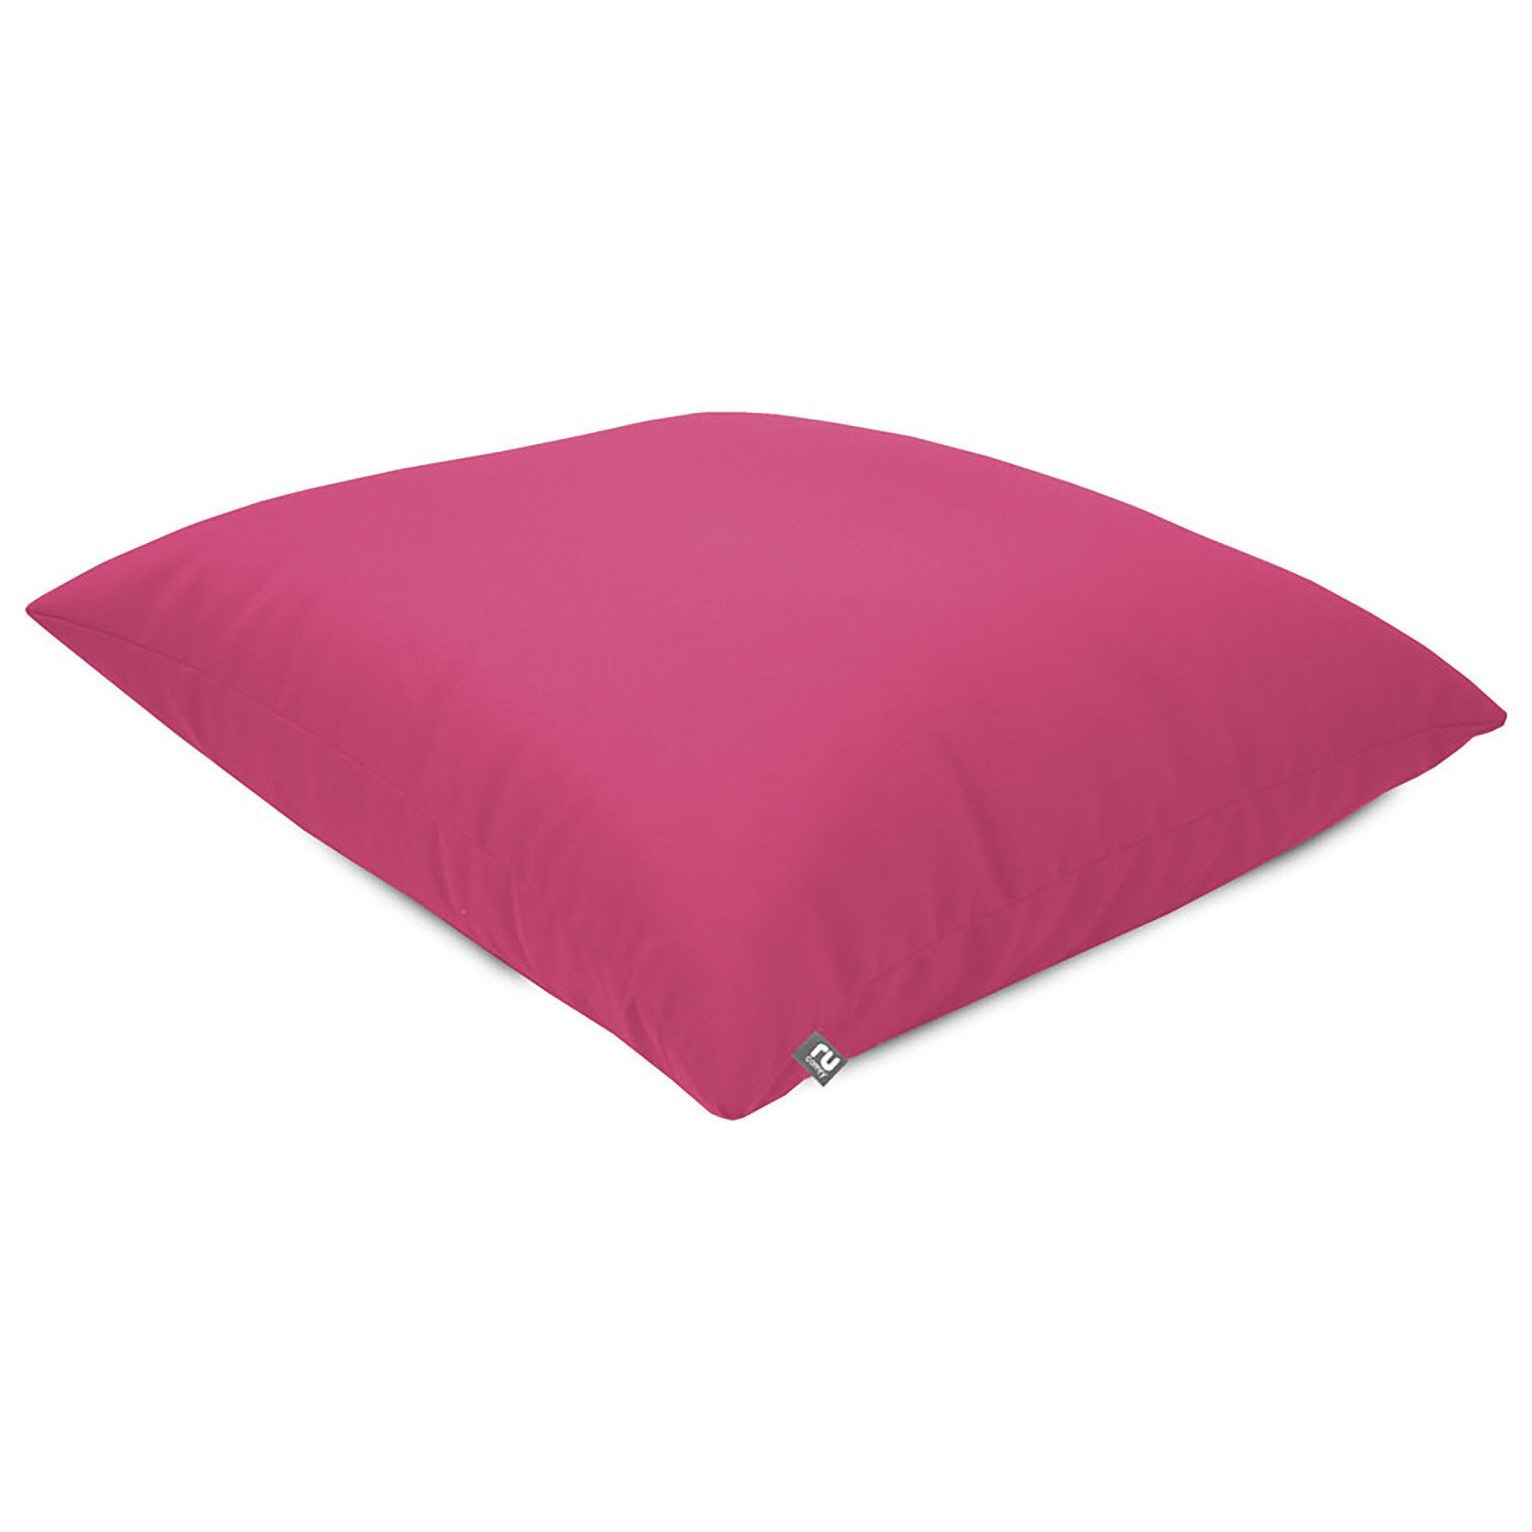 rucomfy Indoor Outdoor Large Floor Cushion - Pink - image 1